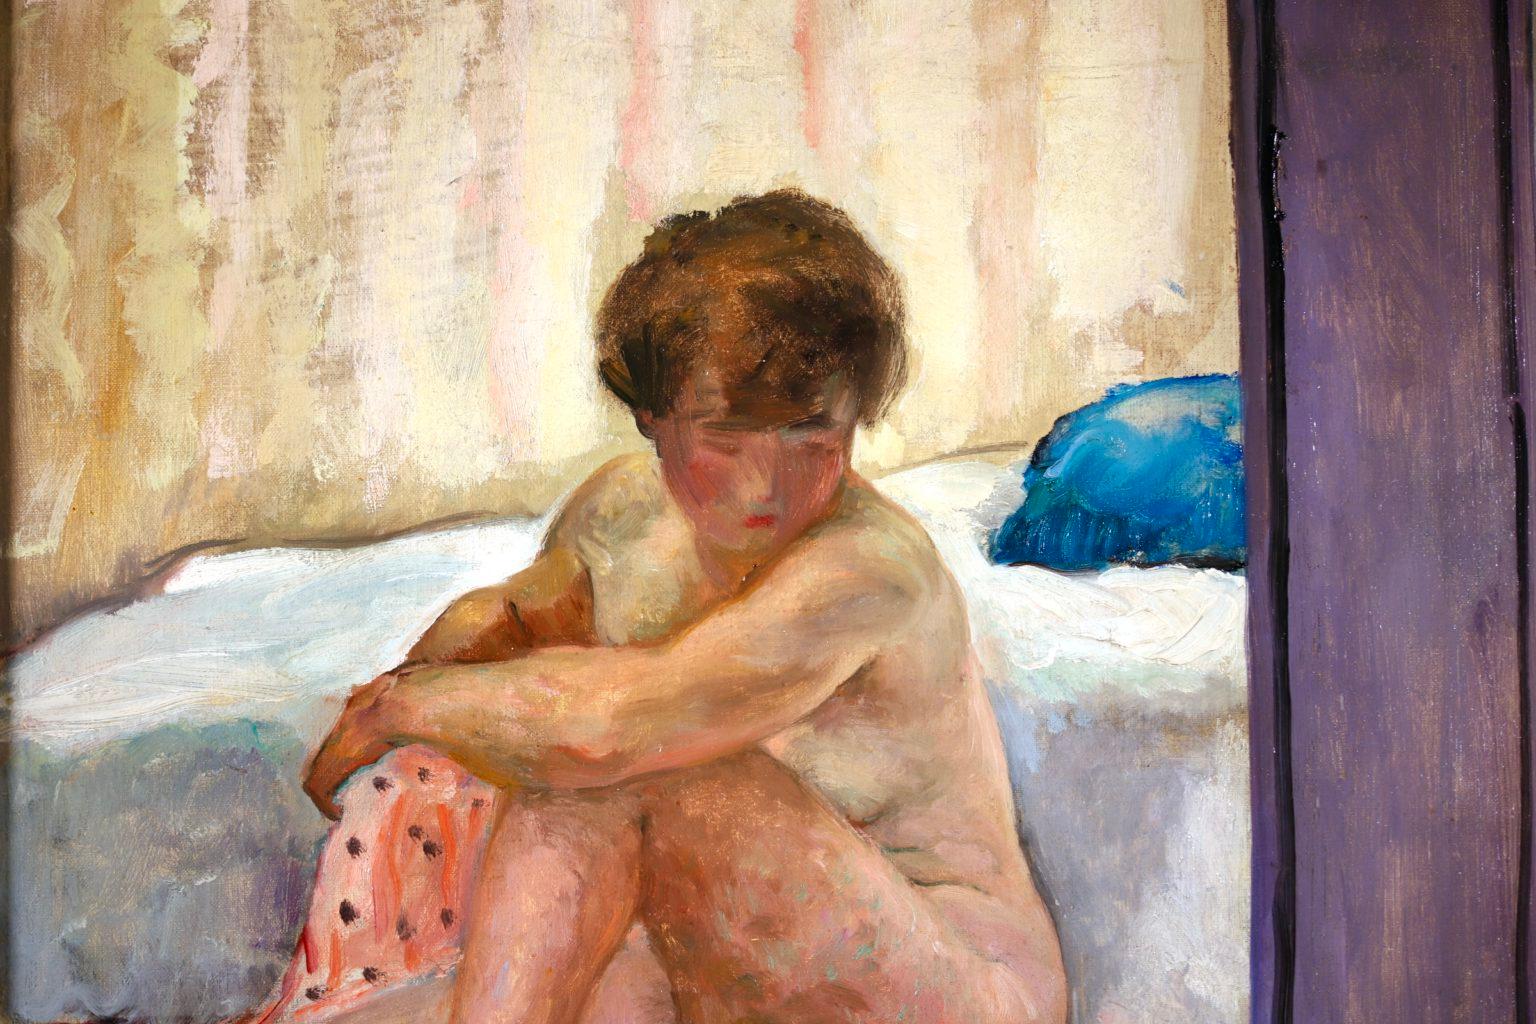 Femme Nu - Post Impressionist Oil, Nude Figure in Interior - Henri Lebasque 1